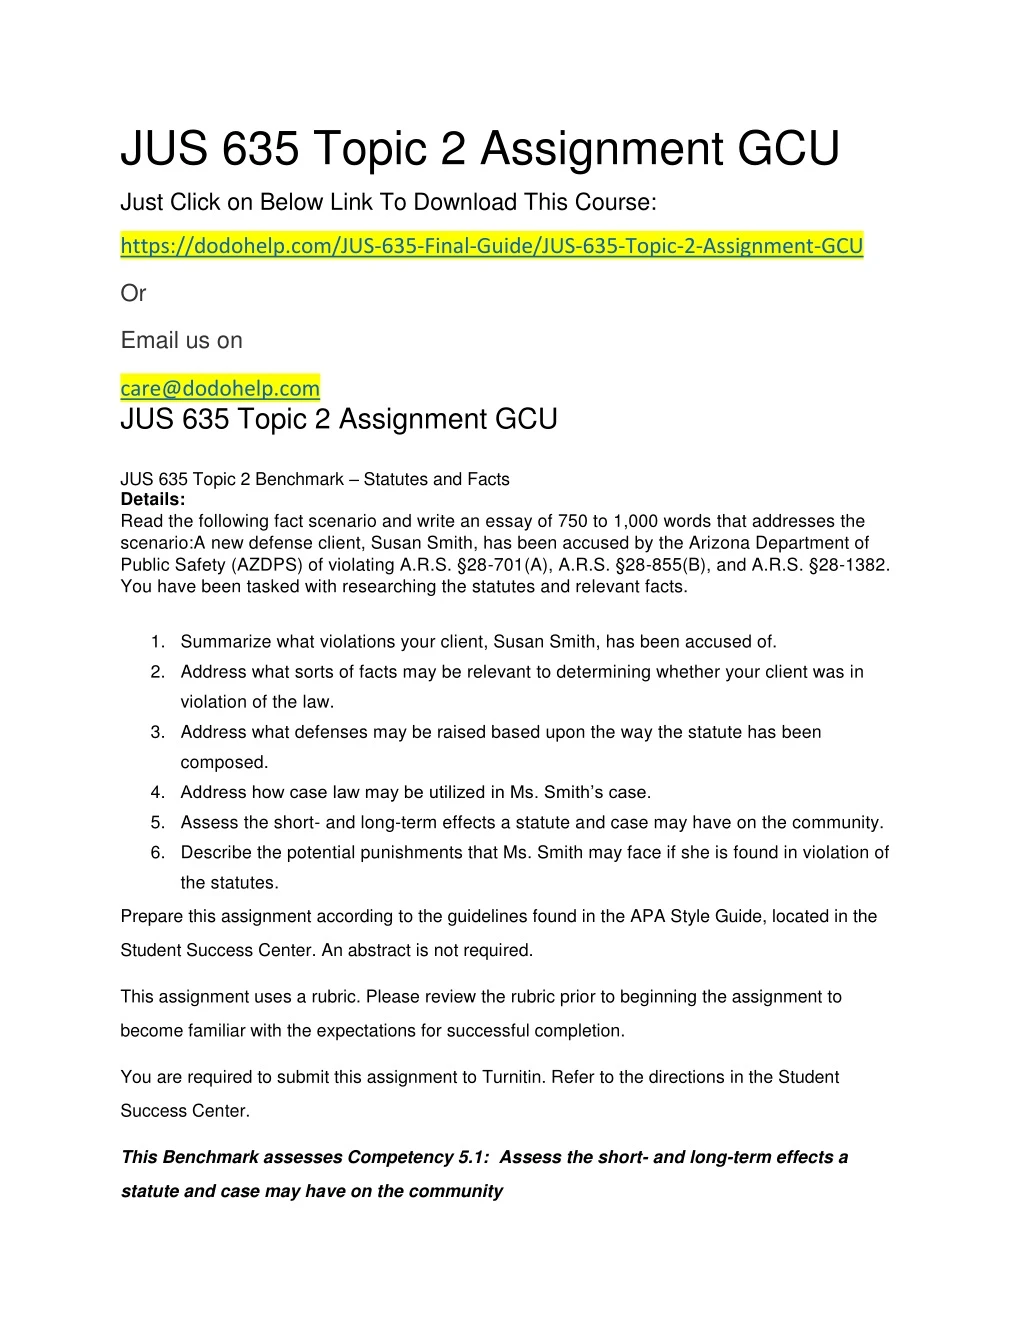 jus 635 topic 2 assignment gcu